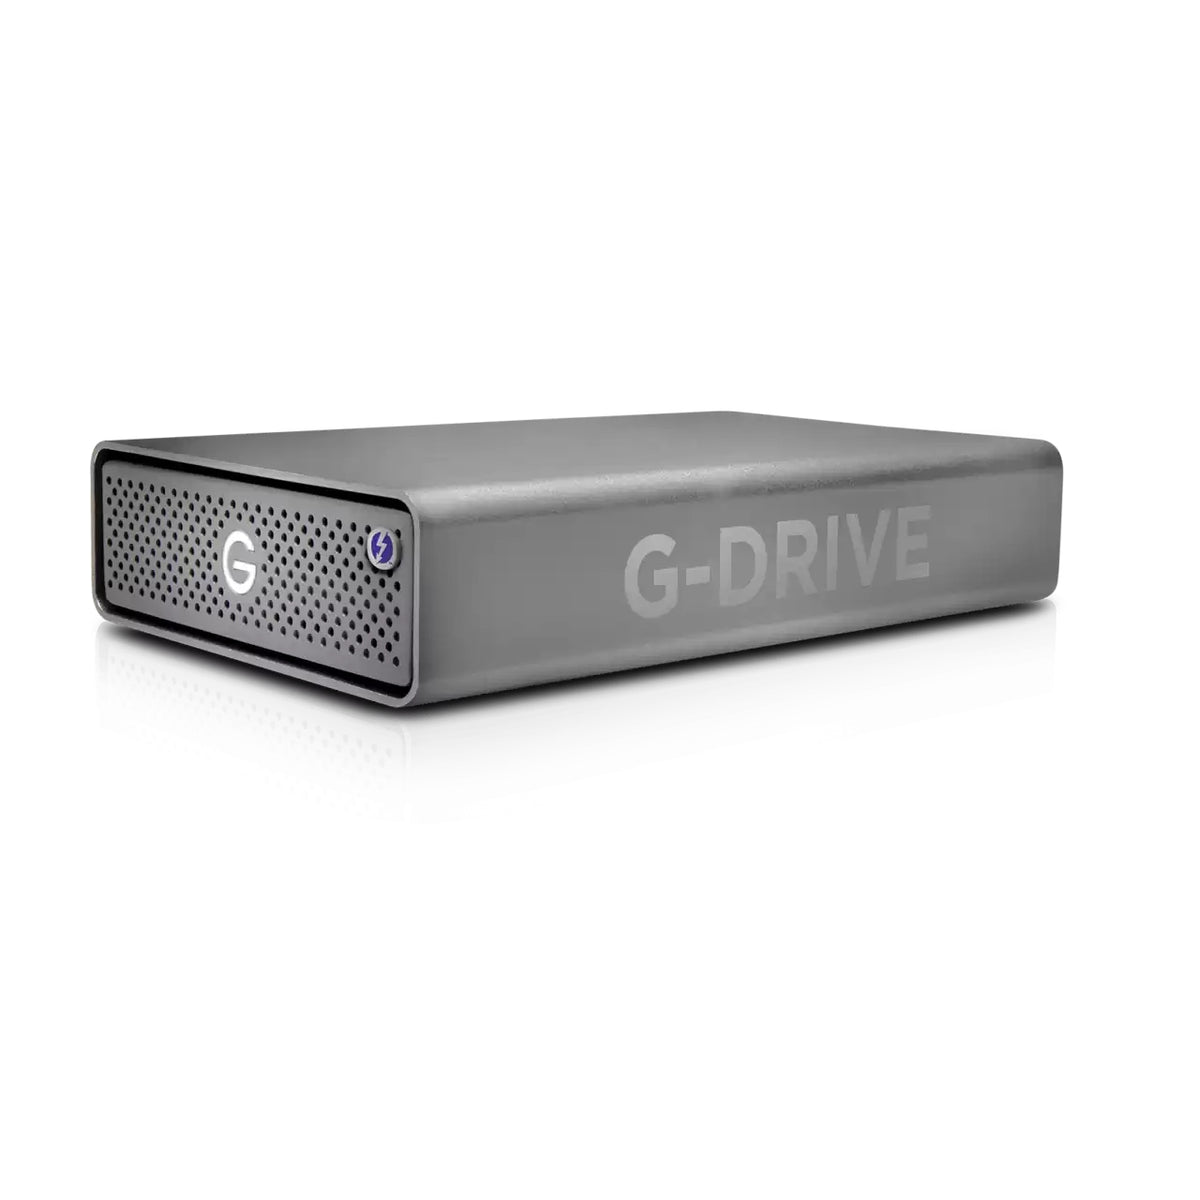 SanDisk Professional G-DRIVE PRO - Hard Drive - 18 TB - External (desktop) - USB 3.2 Gen 1 / Thunderbolt 3 (USB C Connector) - 7200 rpm - Space Gray